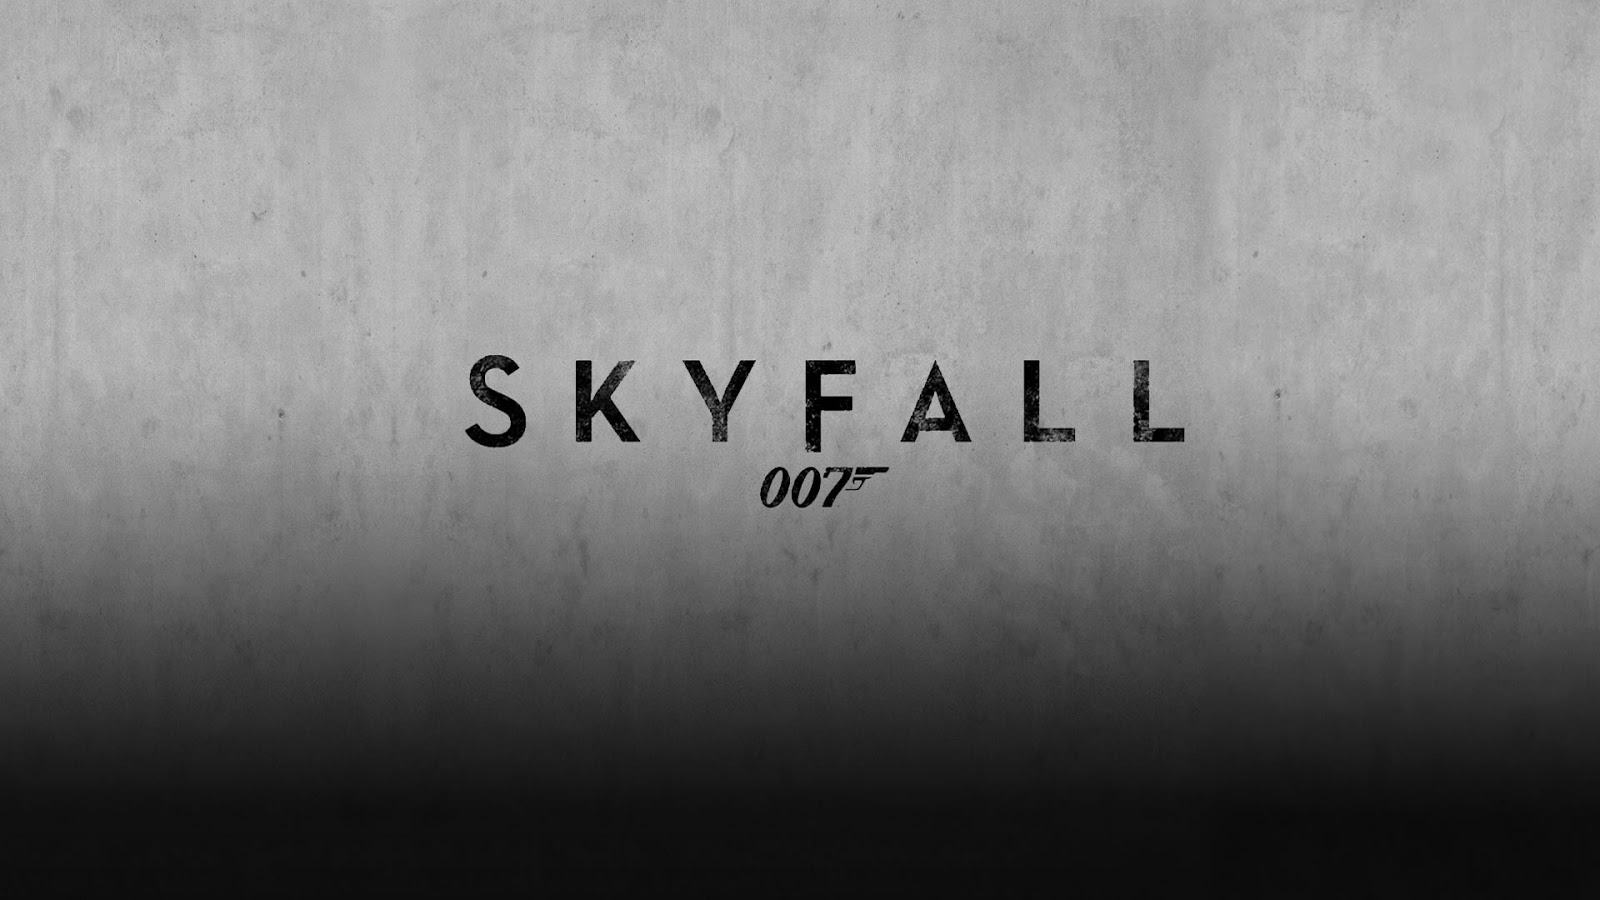 James Bond Movie Skyfall HD Wallpaper For iPad